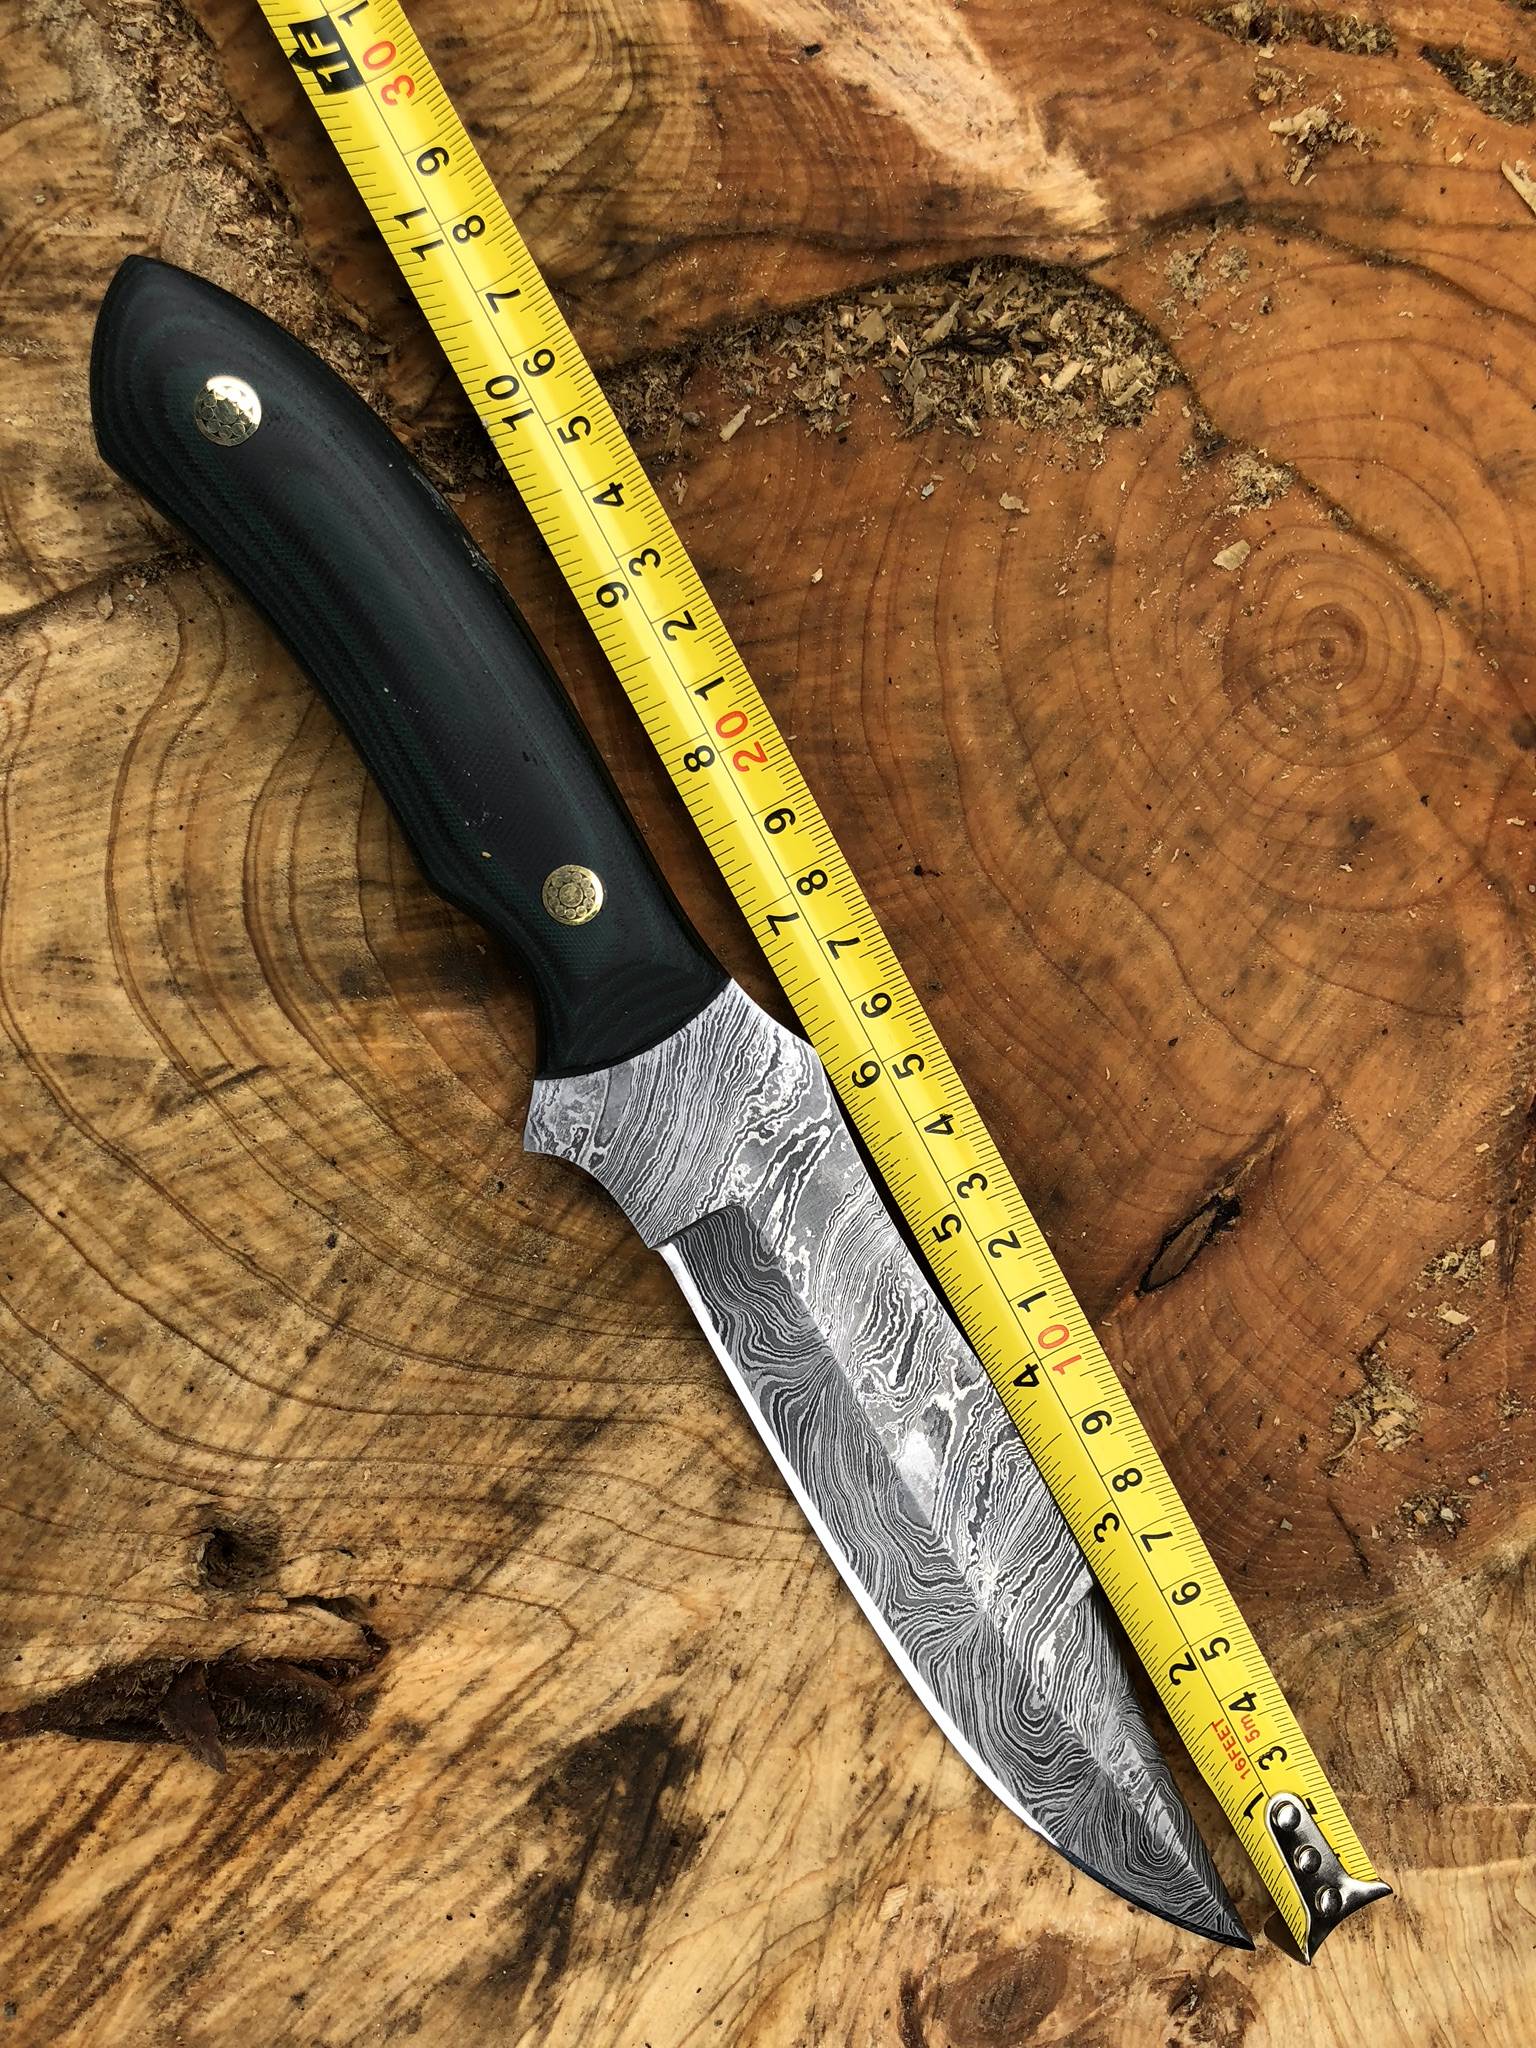 Handmade Knife for Hunting with Sheath